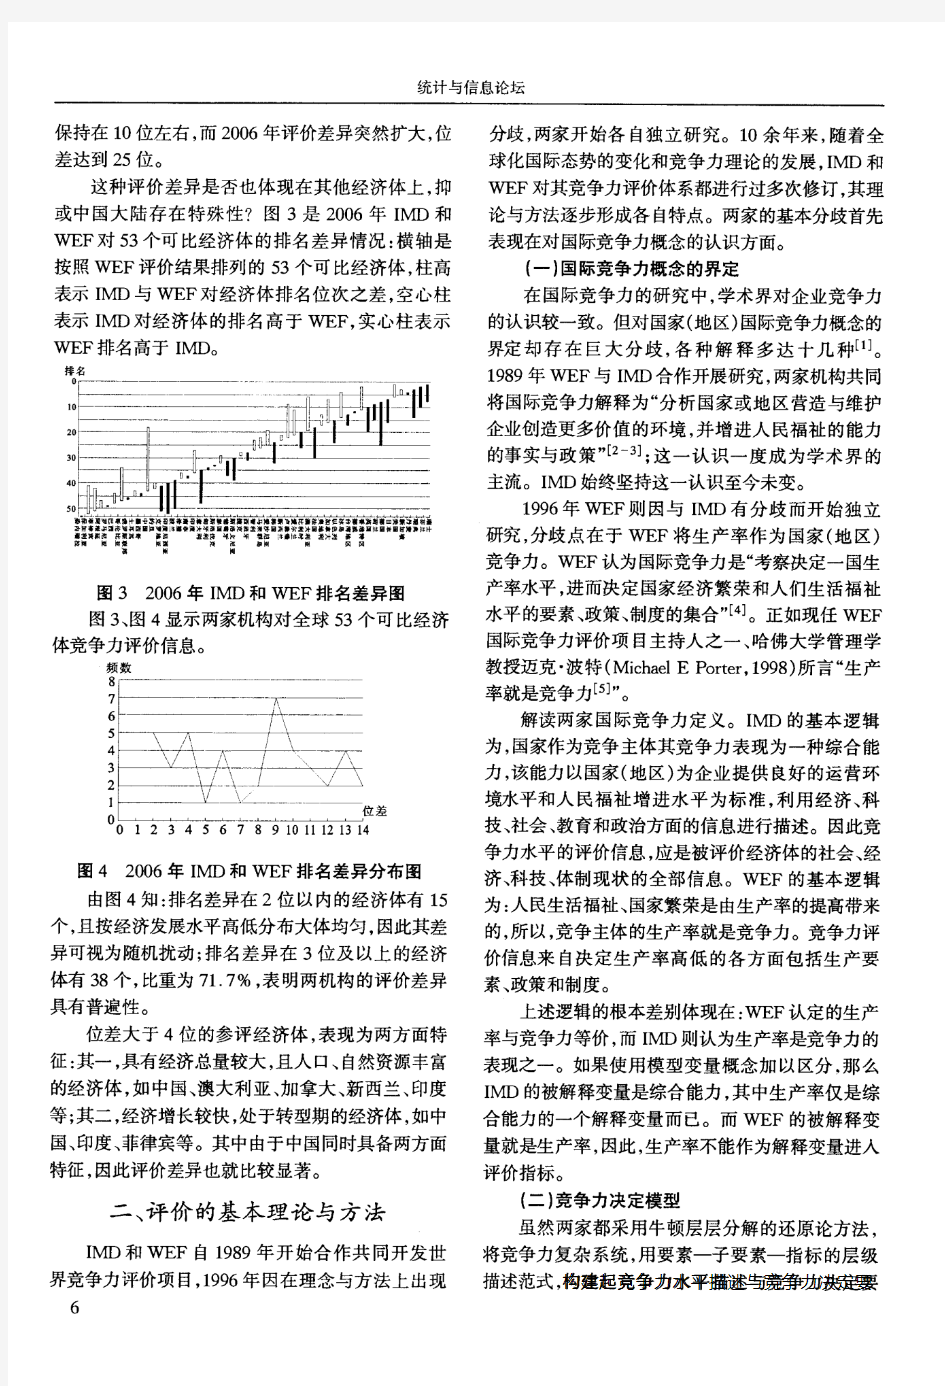 IMD-WEF国际竞争力评价比较研究——以中国为例